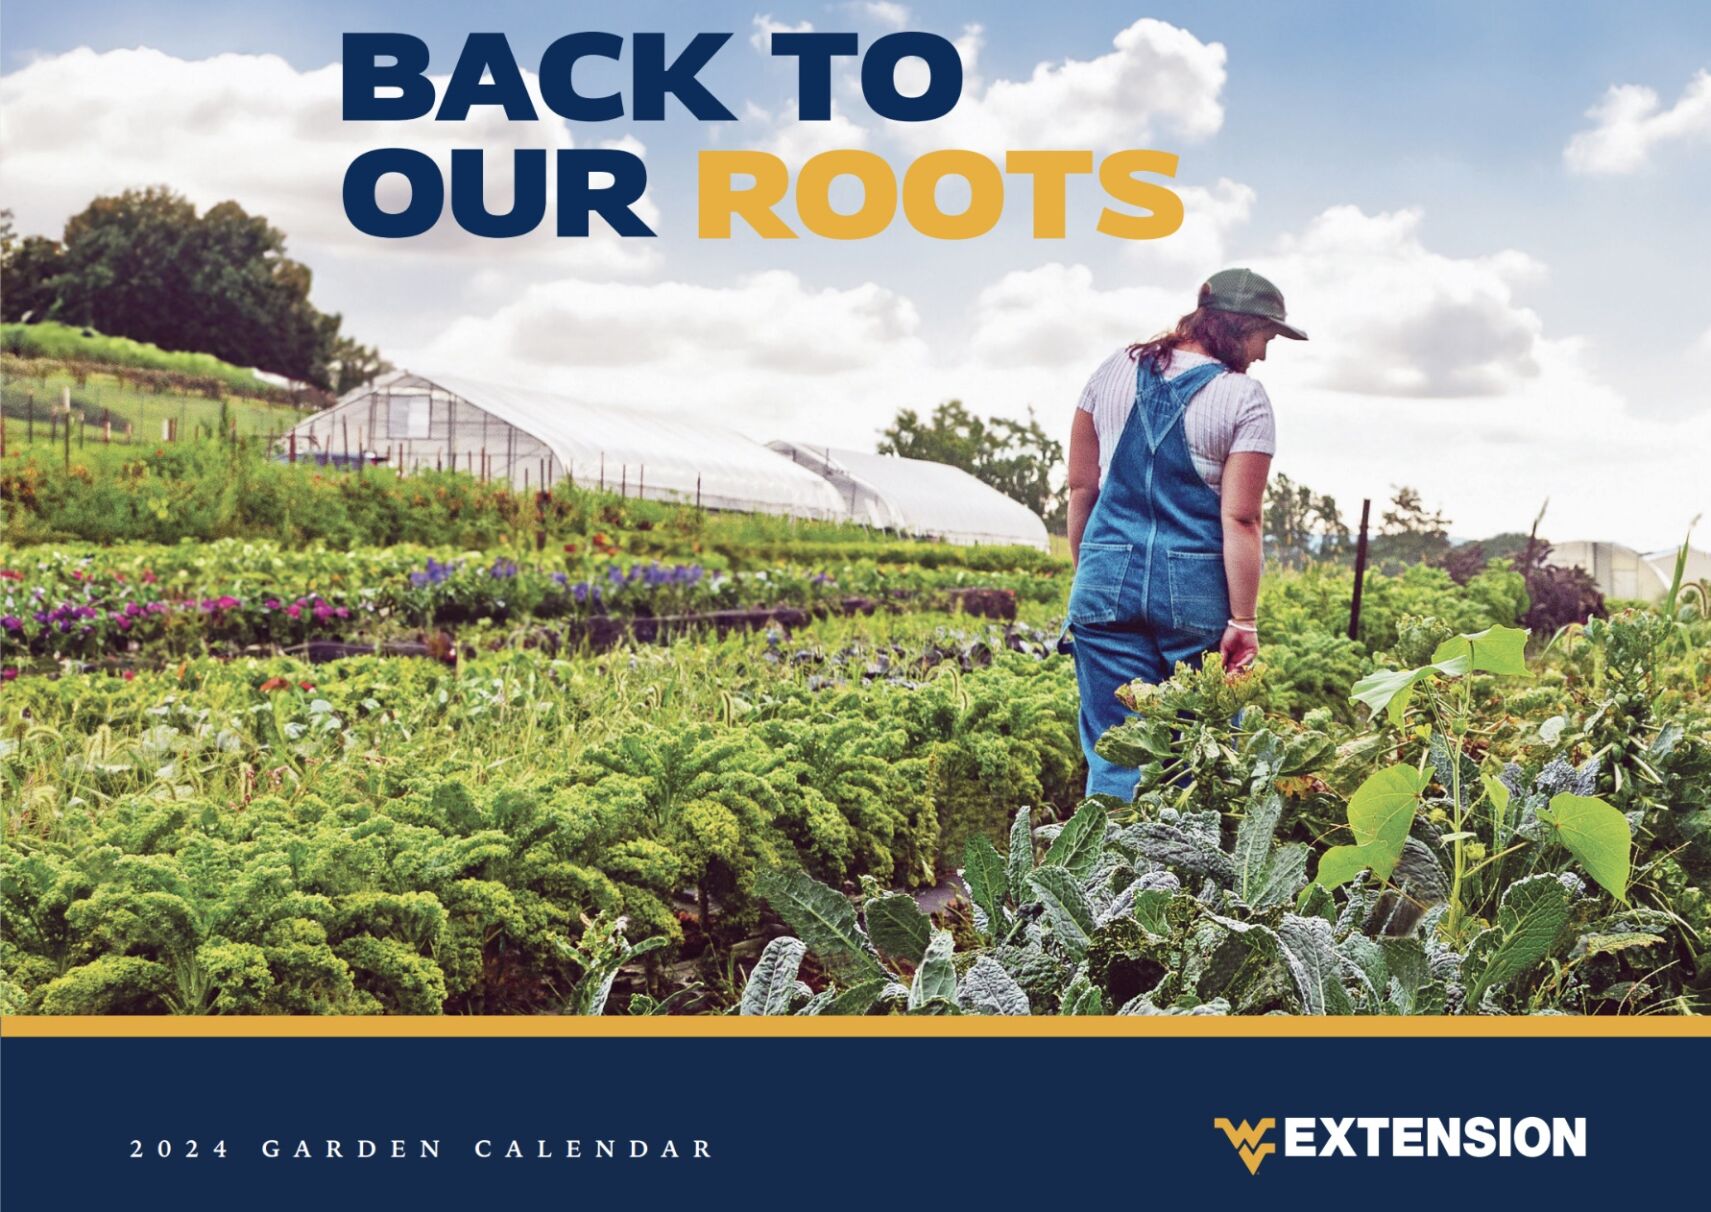 WVU Extension Service 2024 garden calendar celebrates Appalachian roots